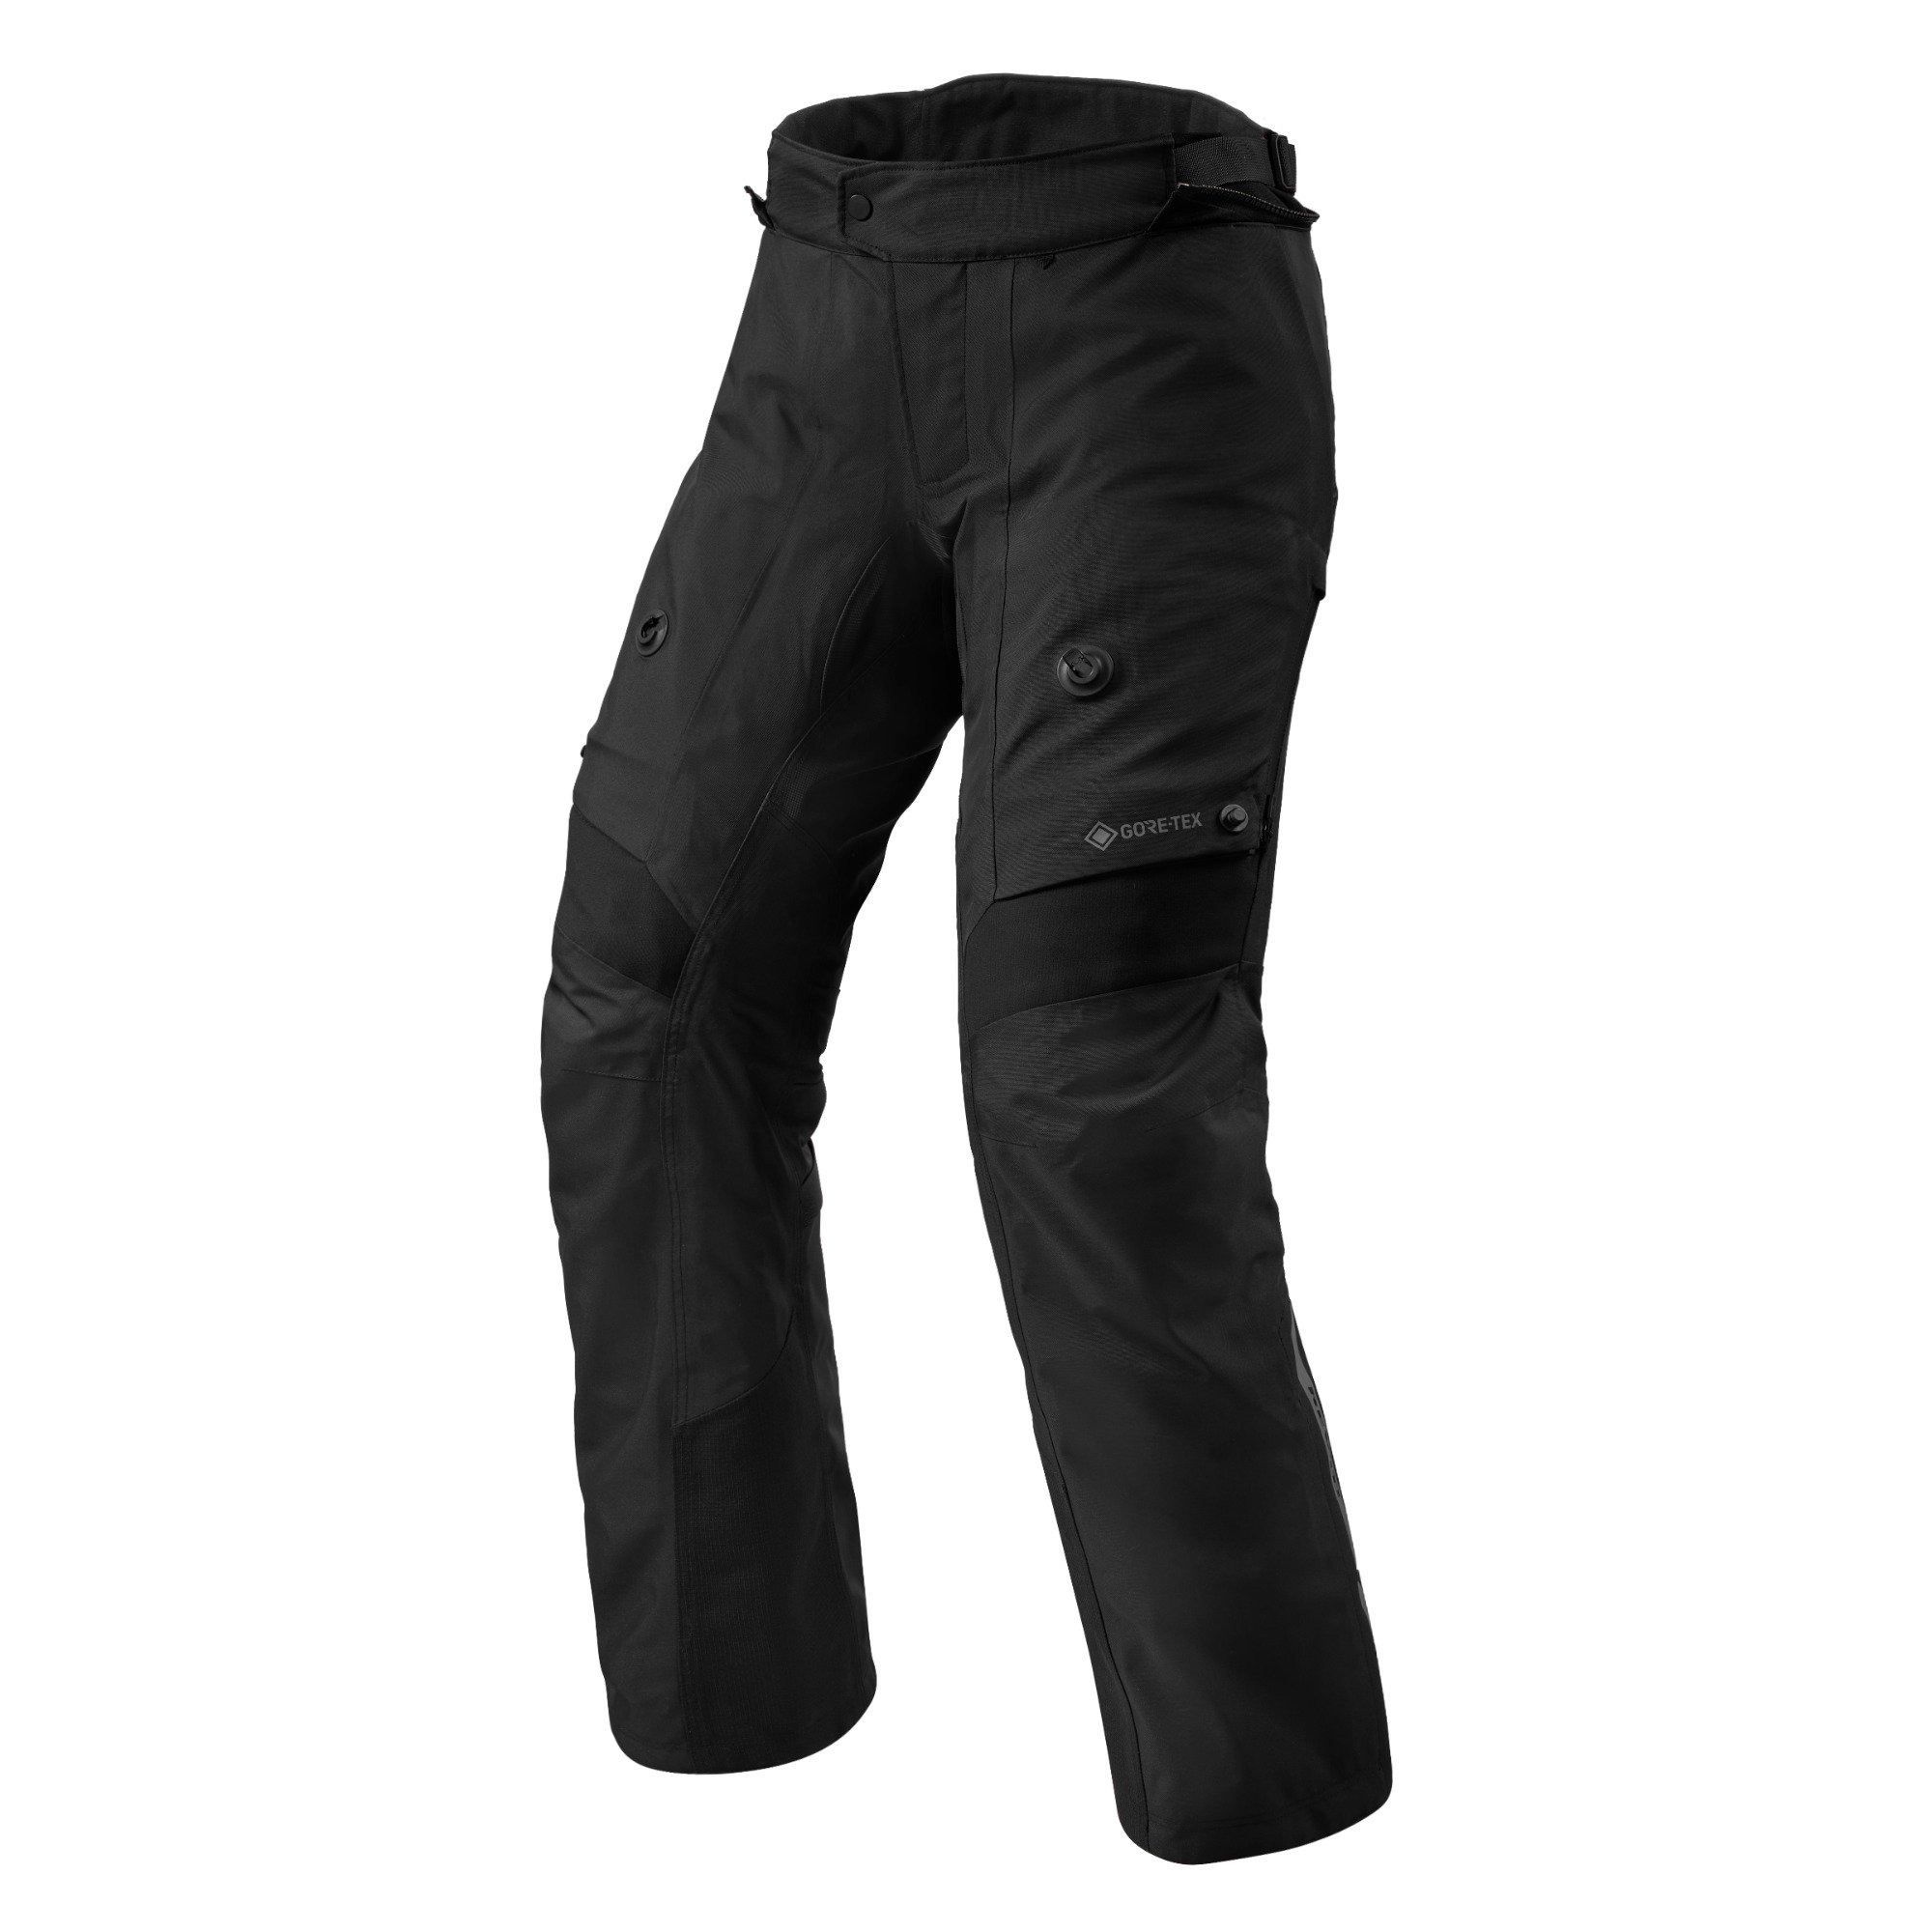 Image of REV'IT! Pants Poseidon 3 GTX Black Standard Motorcycle Pants Talla 3XL